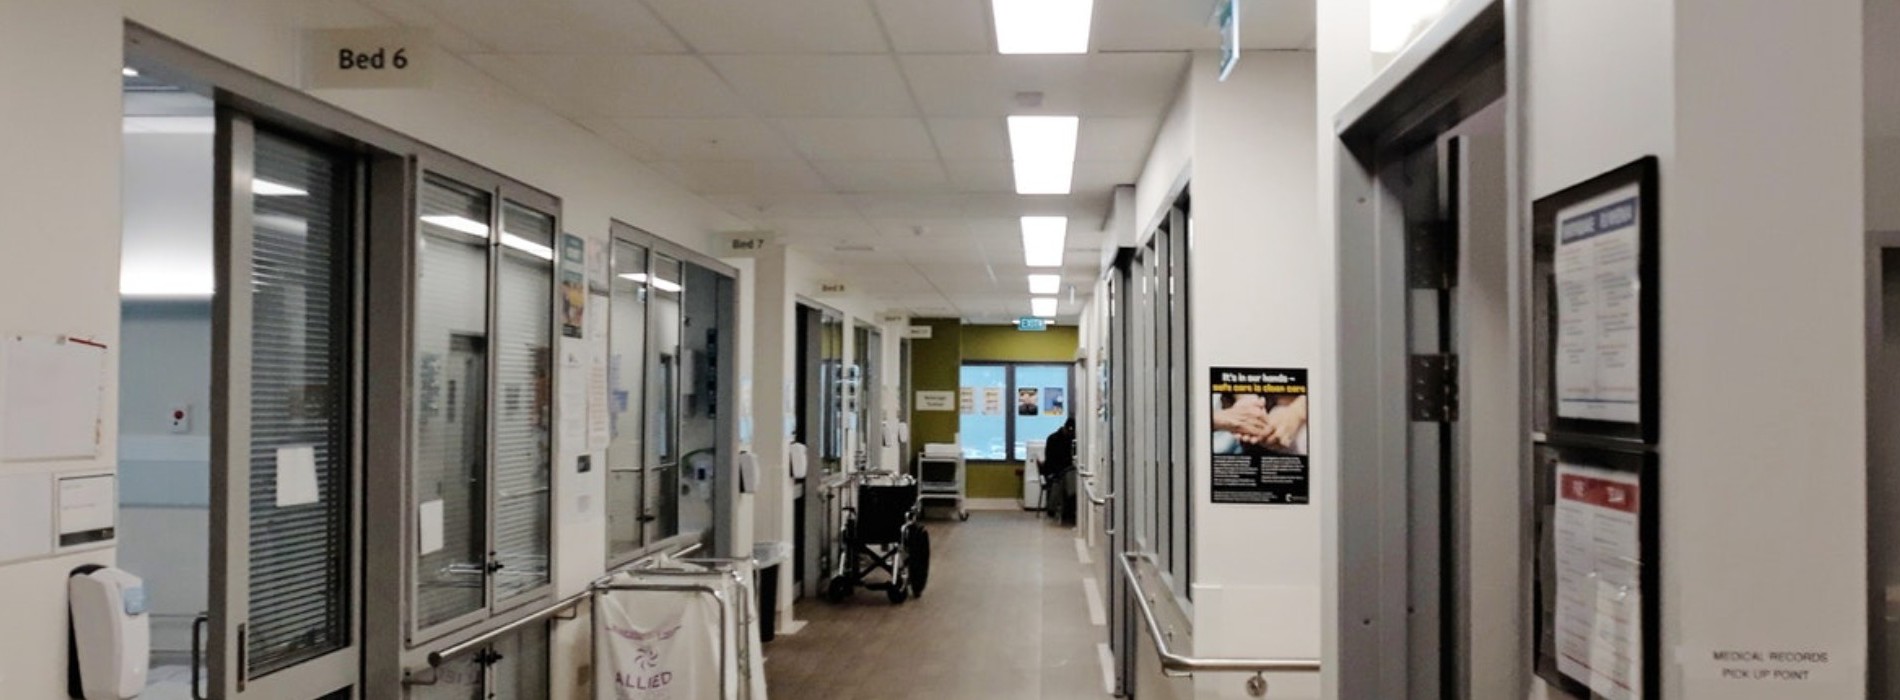 Wellington Hospital Corridor Header